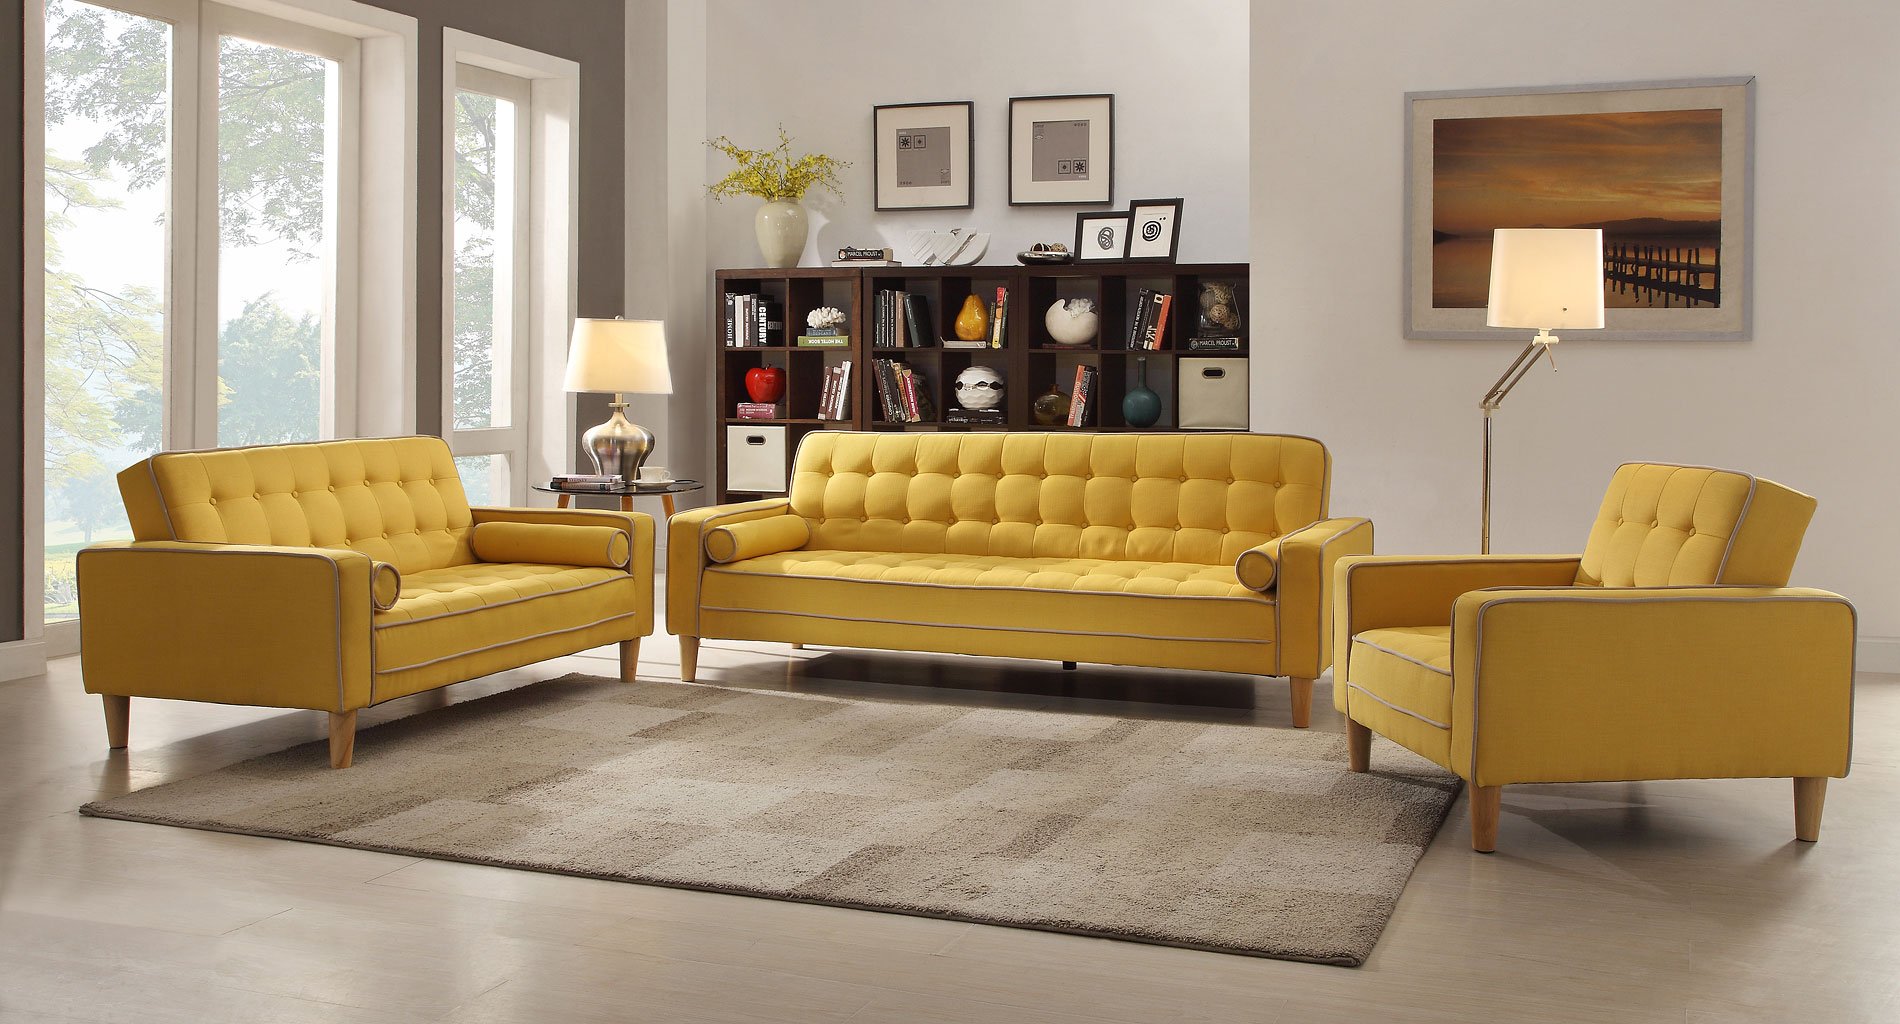 G834 Living Room Set (Yellow) - Living Room Sets - Living Room